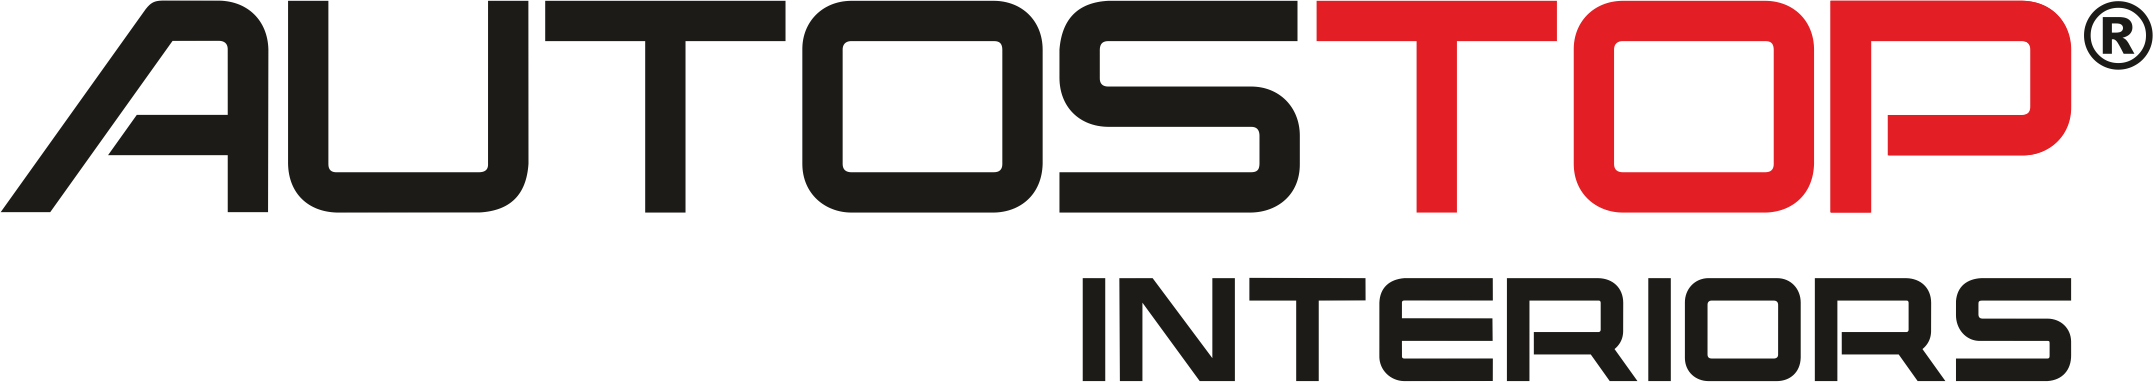 logo Interiors